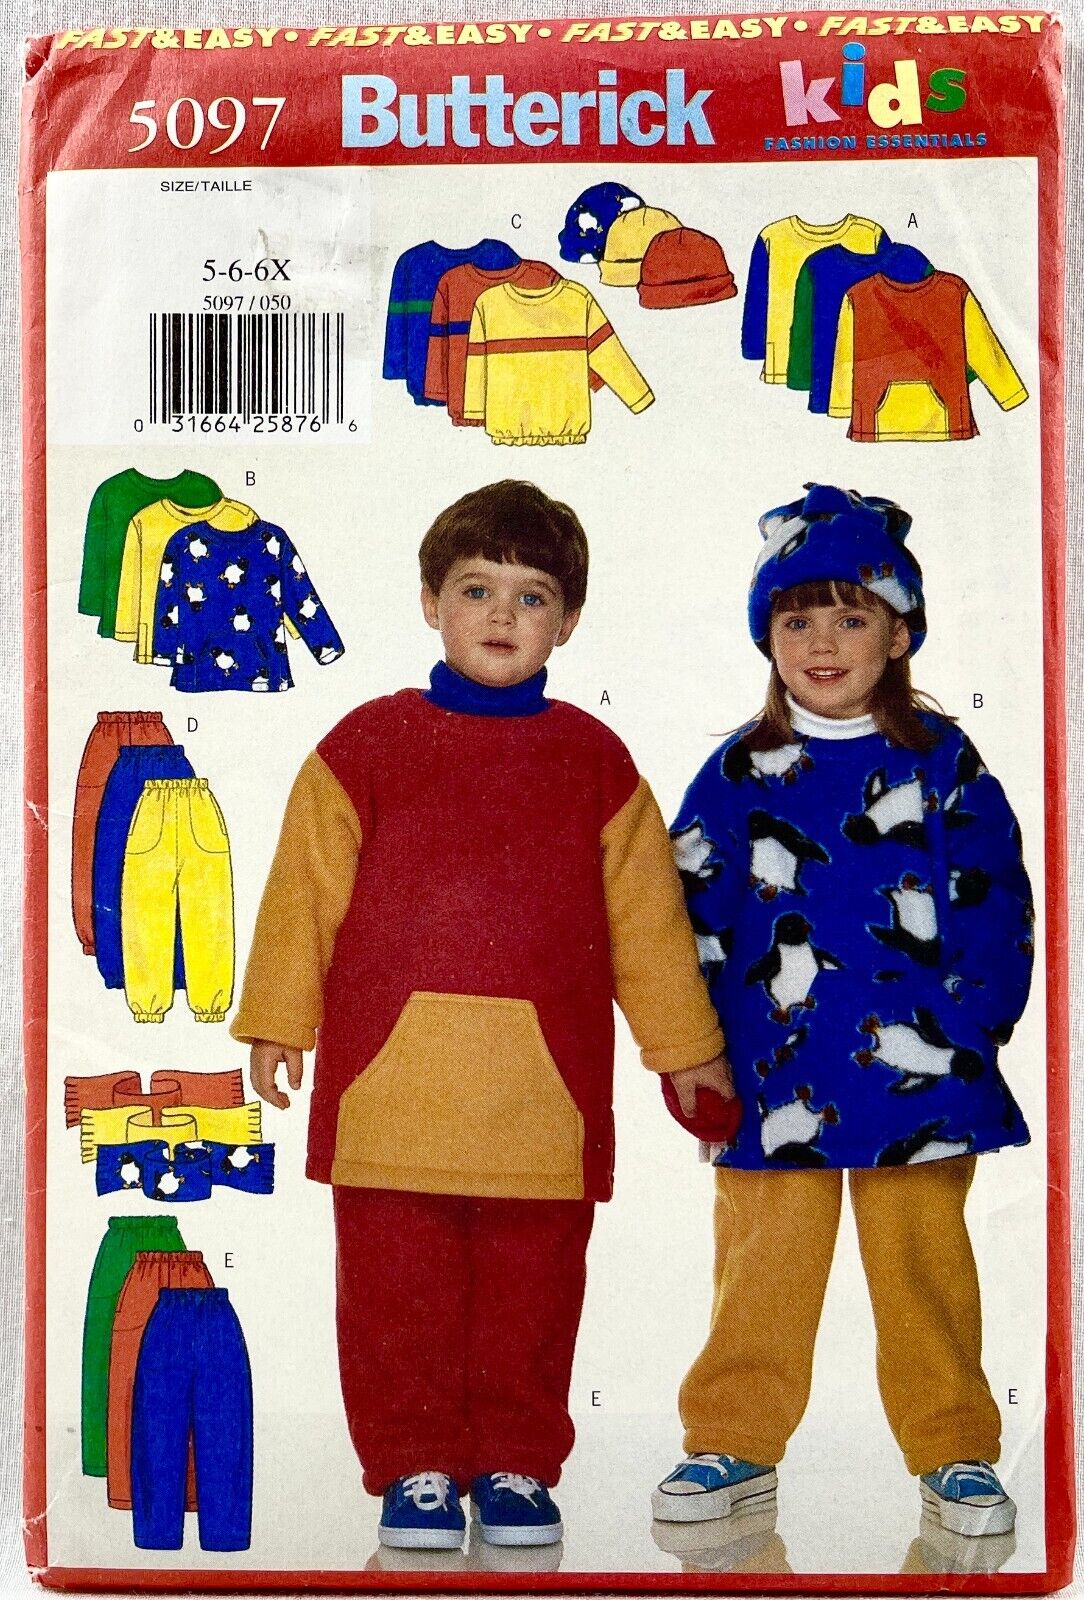 1997 Butterick Sewing Pattern 5097 Boys Girls Top Pants Hat Scarf Sz 5-6X 15254